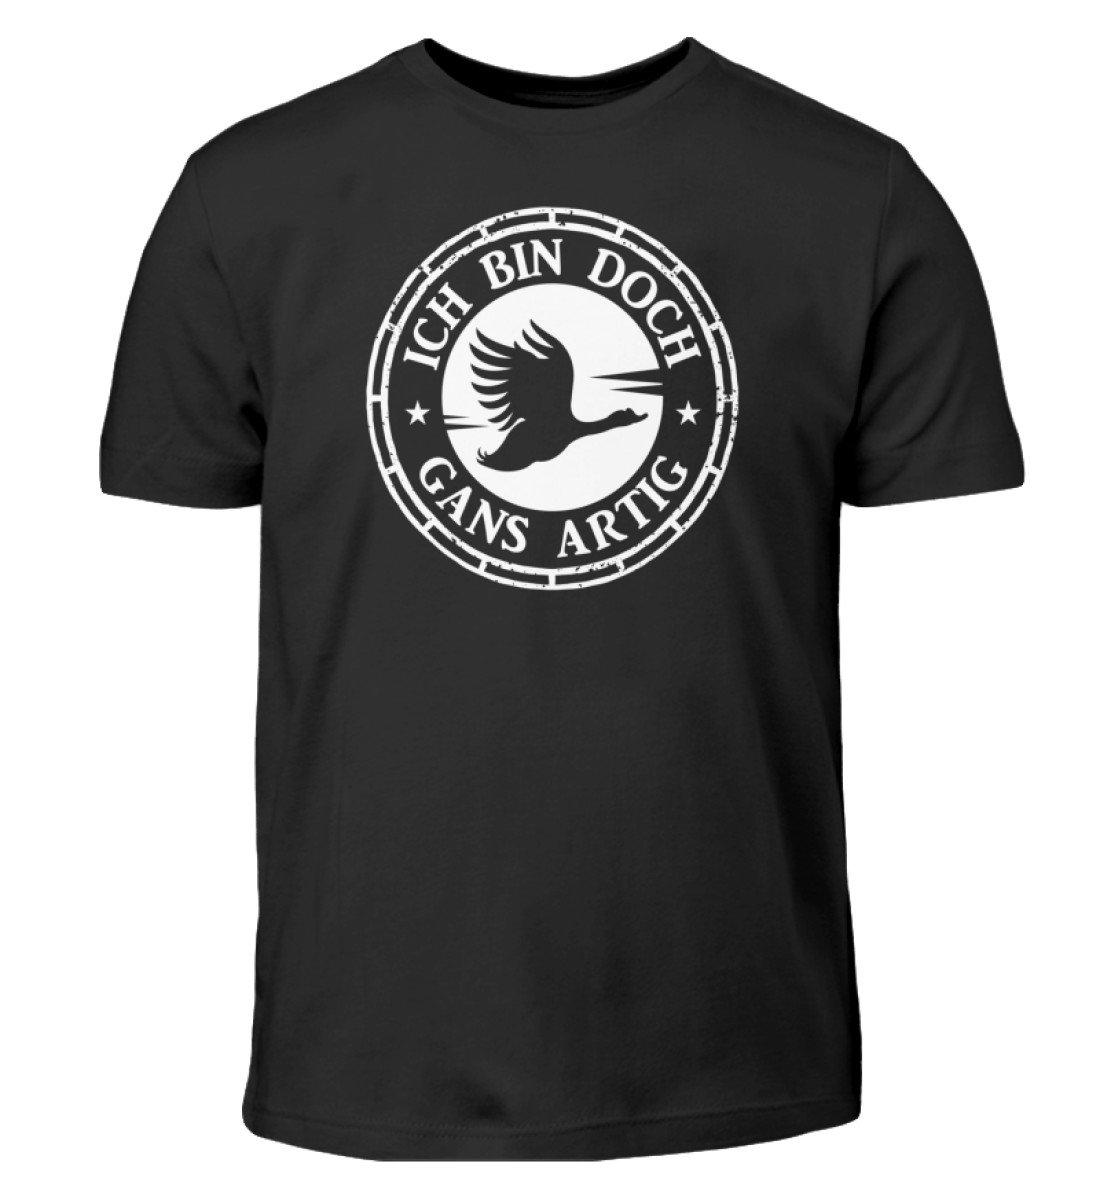 Gans artig · Kinder T-Shirt-Kinder T-Shirt-Black-3/4 (98/104)-Agrarstarz